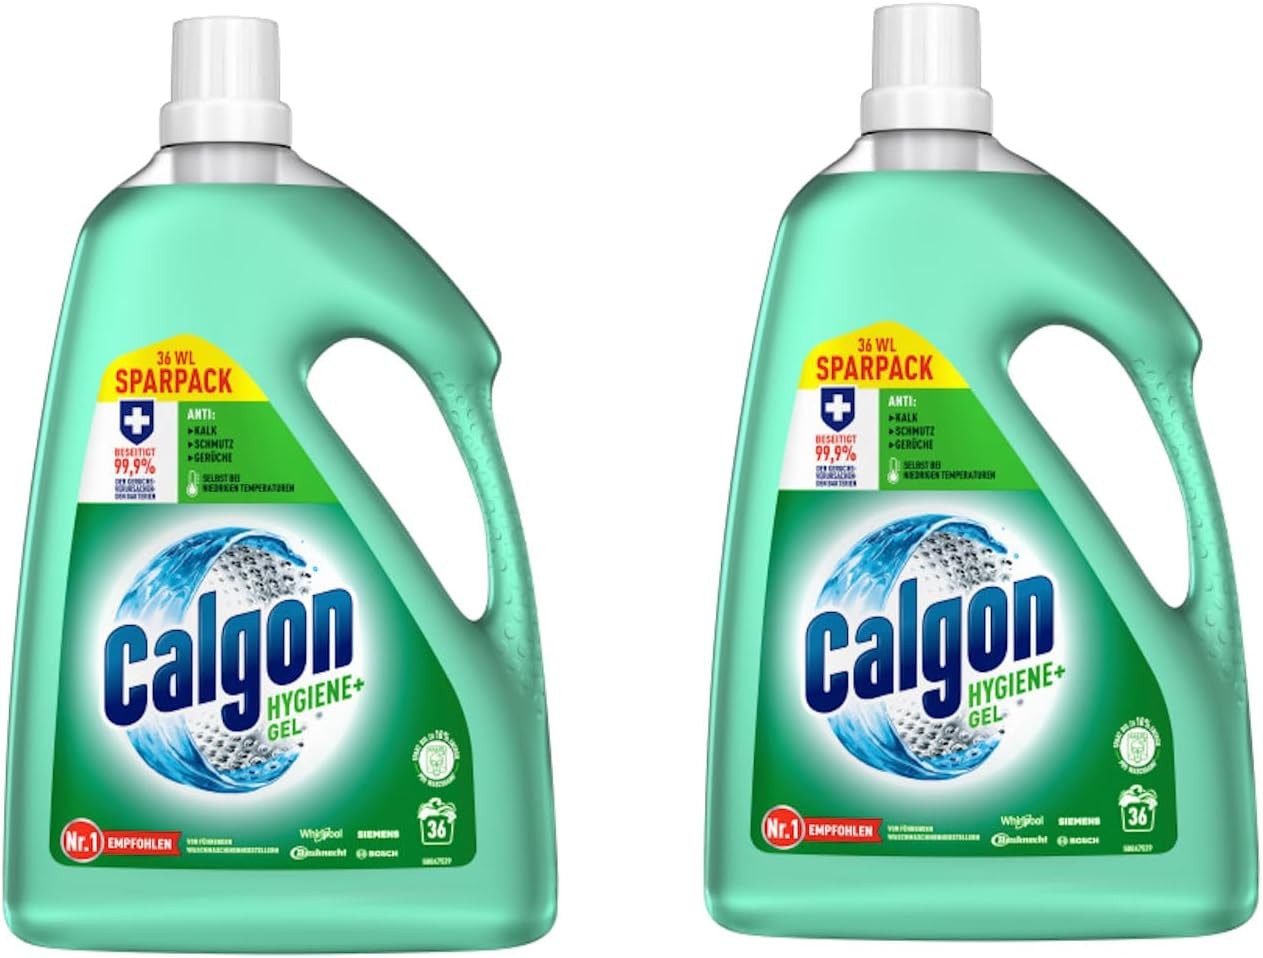 Calgon Hygiene+ Gel Wasserenthärter (Spar-Pack, [2-St. 2 x 1800 ml Antibakteriell)